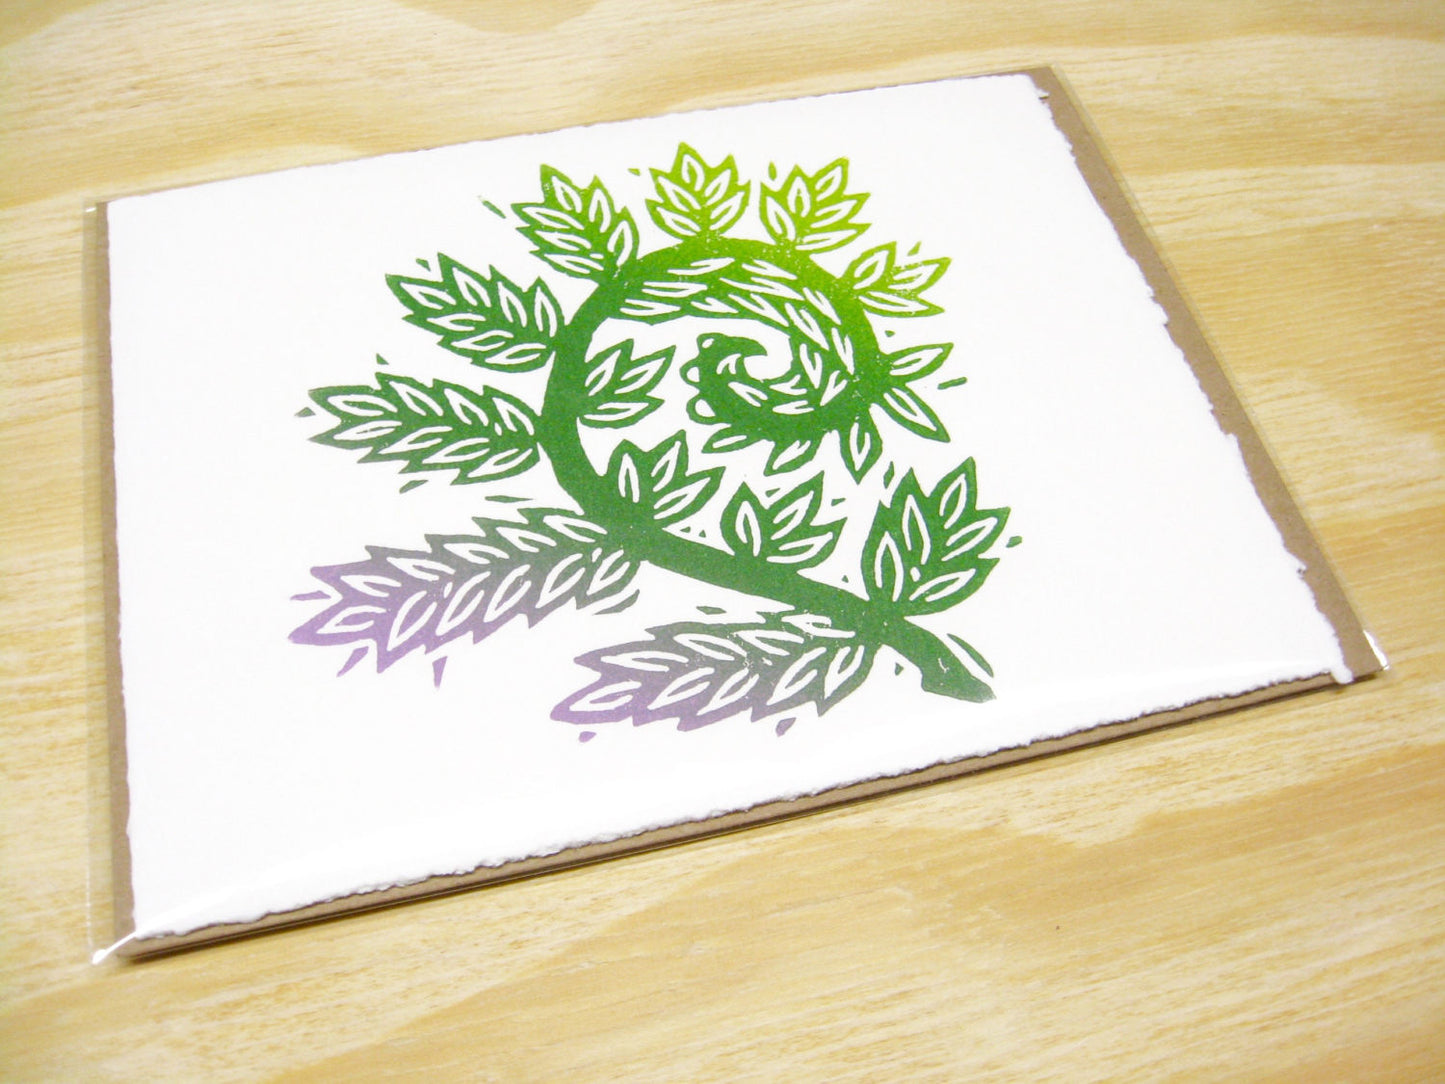 Fiddlehead Fern single card - woodblock printed